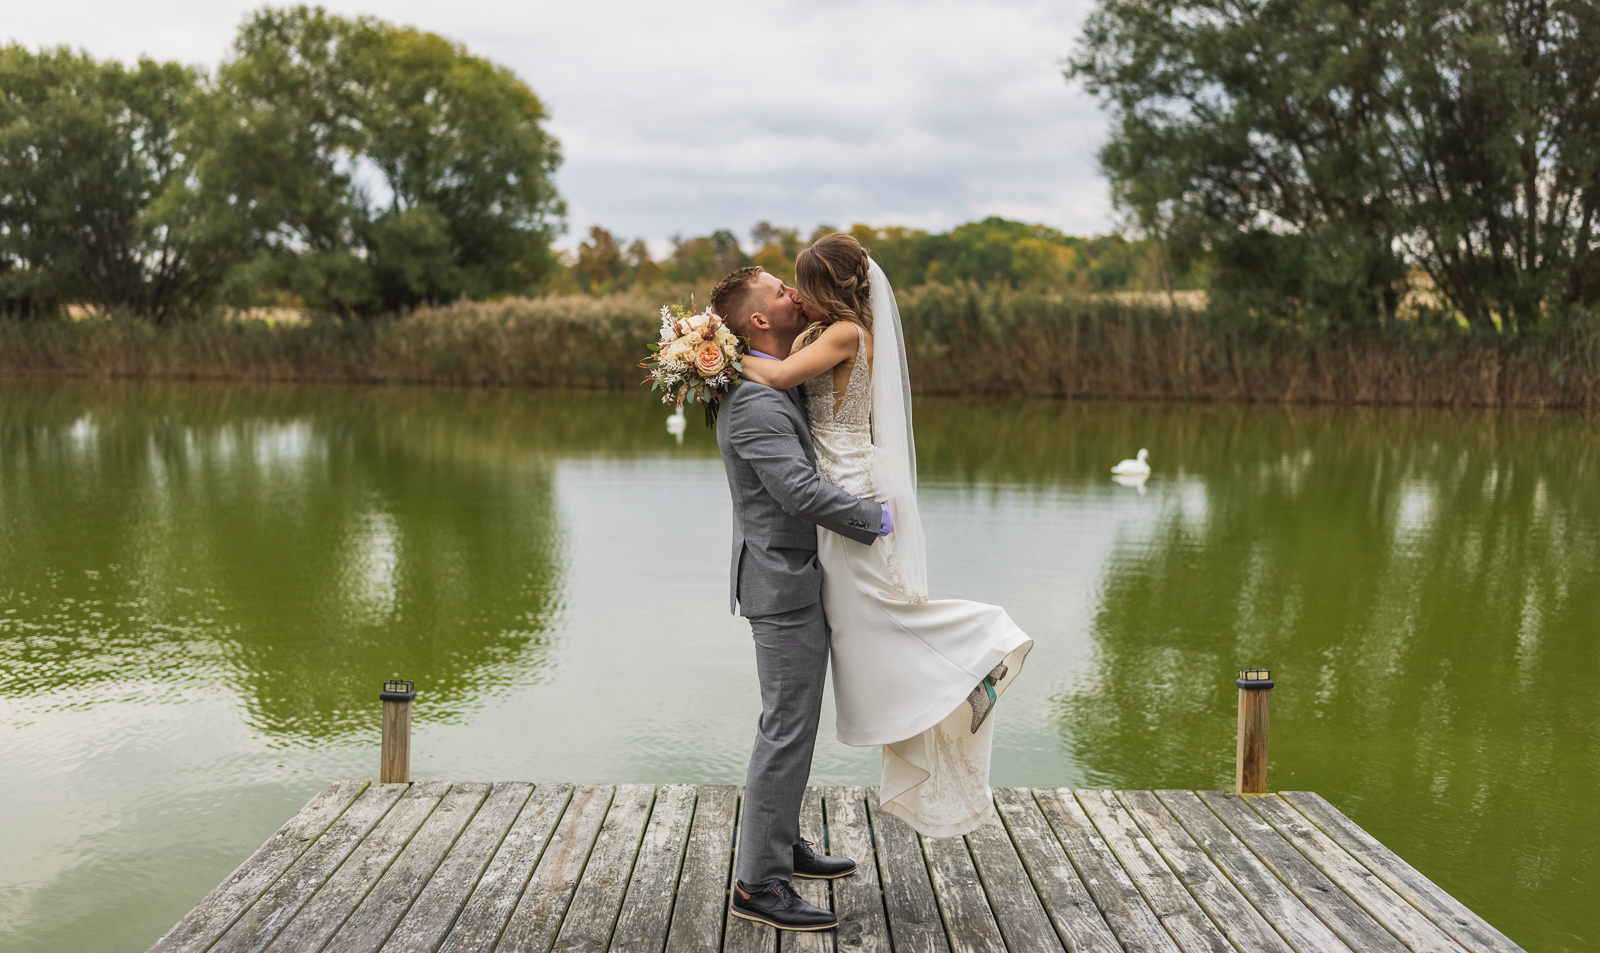 Bride and groom, kiss, wedding portrait, bridal portrait, nature, dock, pond, ducks, goose, fall wedding, rustic outdoor wedding ceremony at White Birch Barn